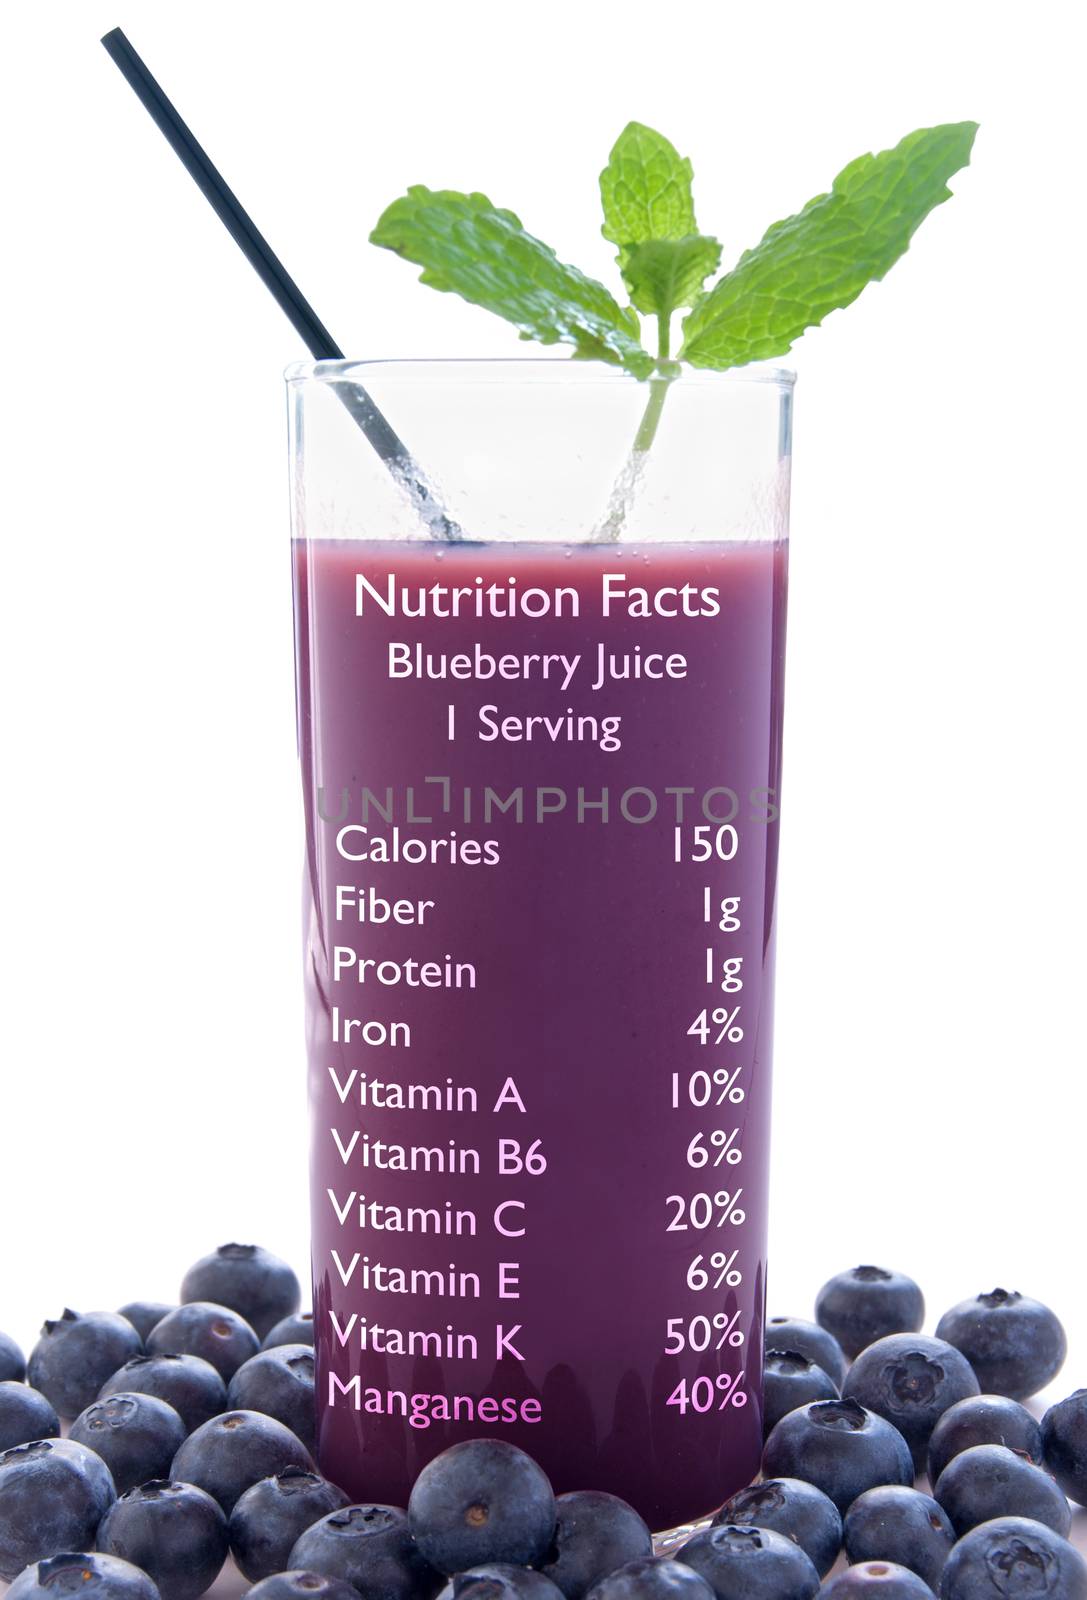 Blueberry juice nutrition facts  by unikpix